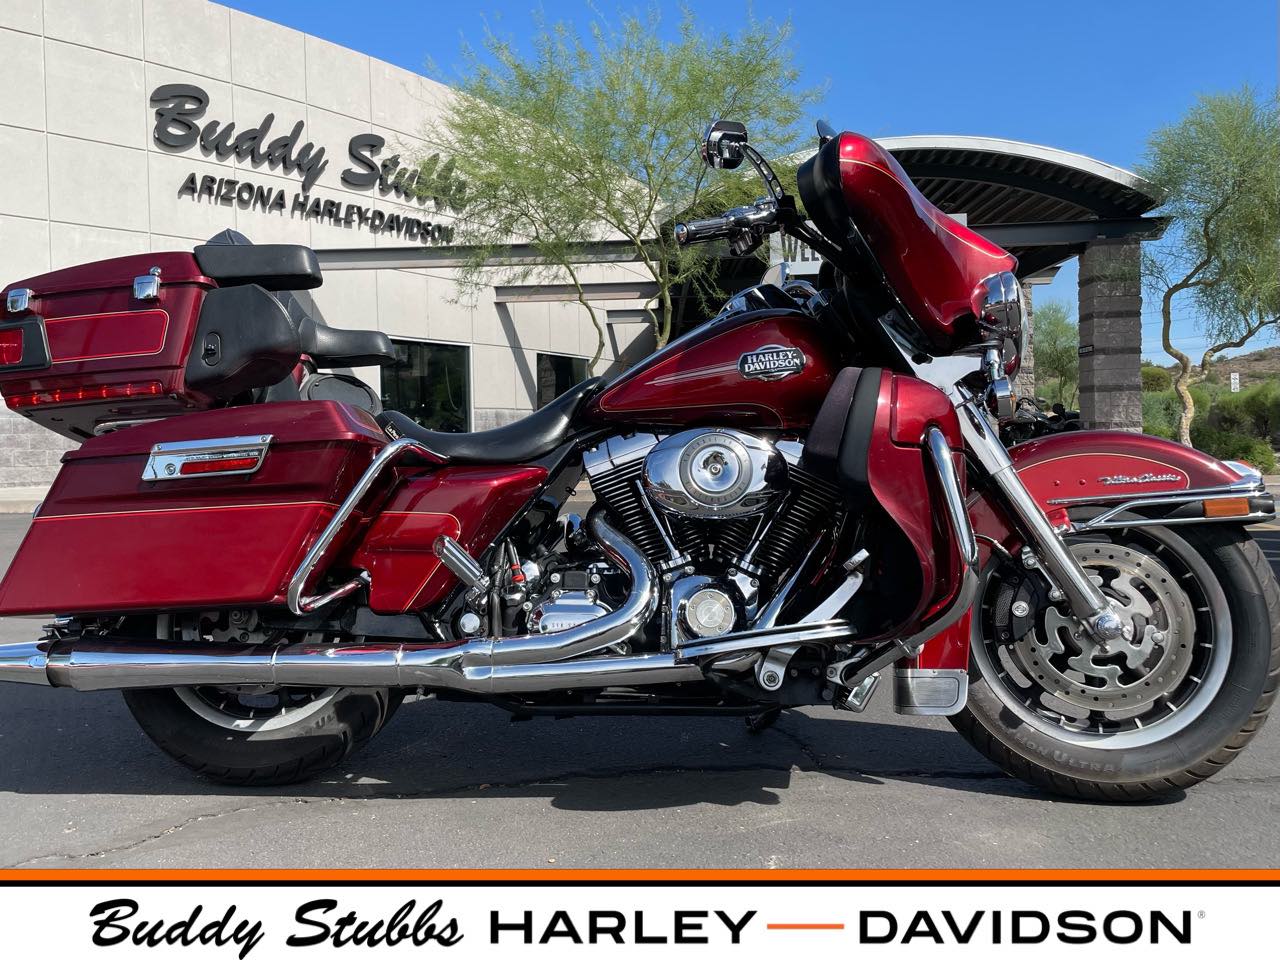 2008 Harley-Davidson Electra Glide Ultra Classic at Buddy Stubbs Arizona Harley-Davidson